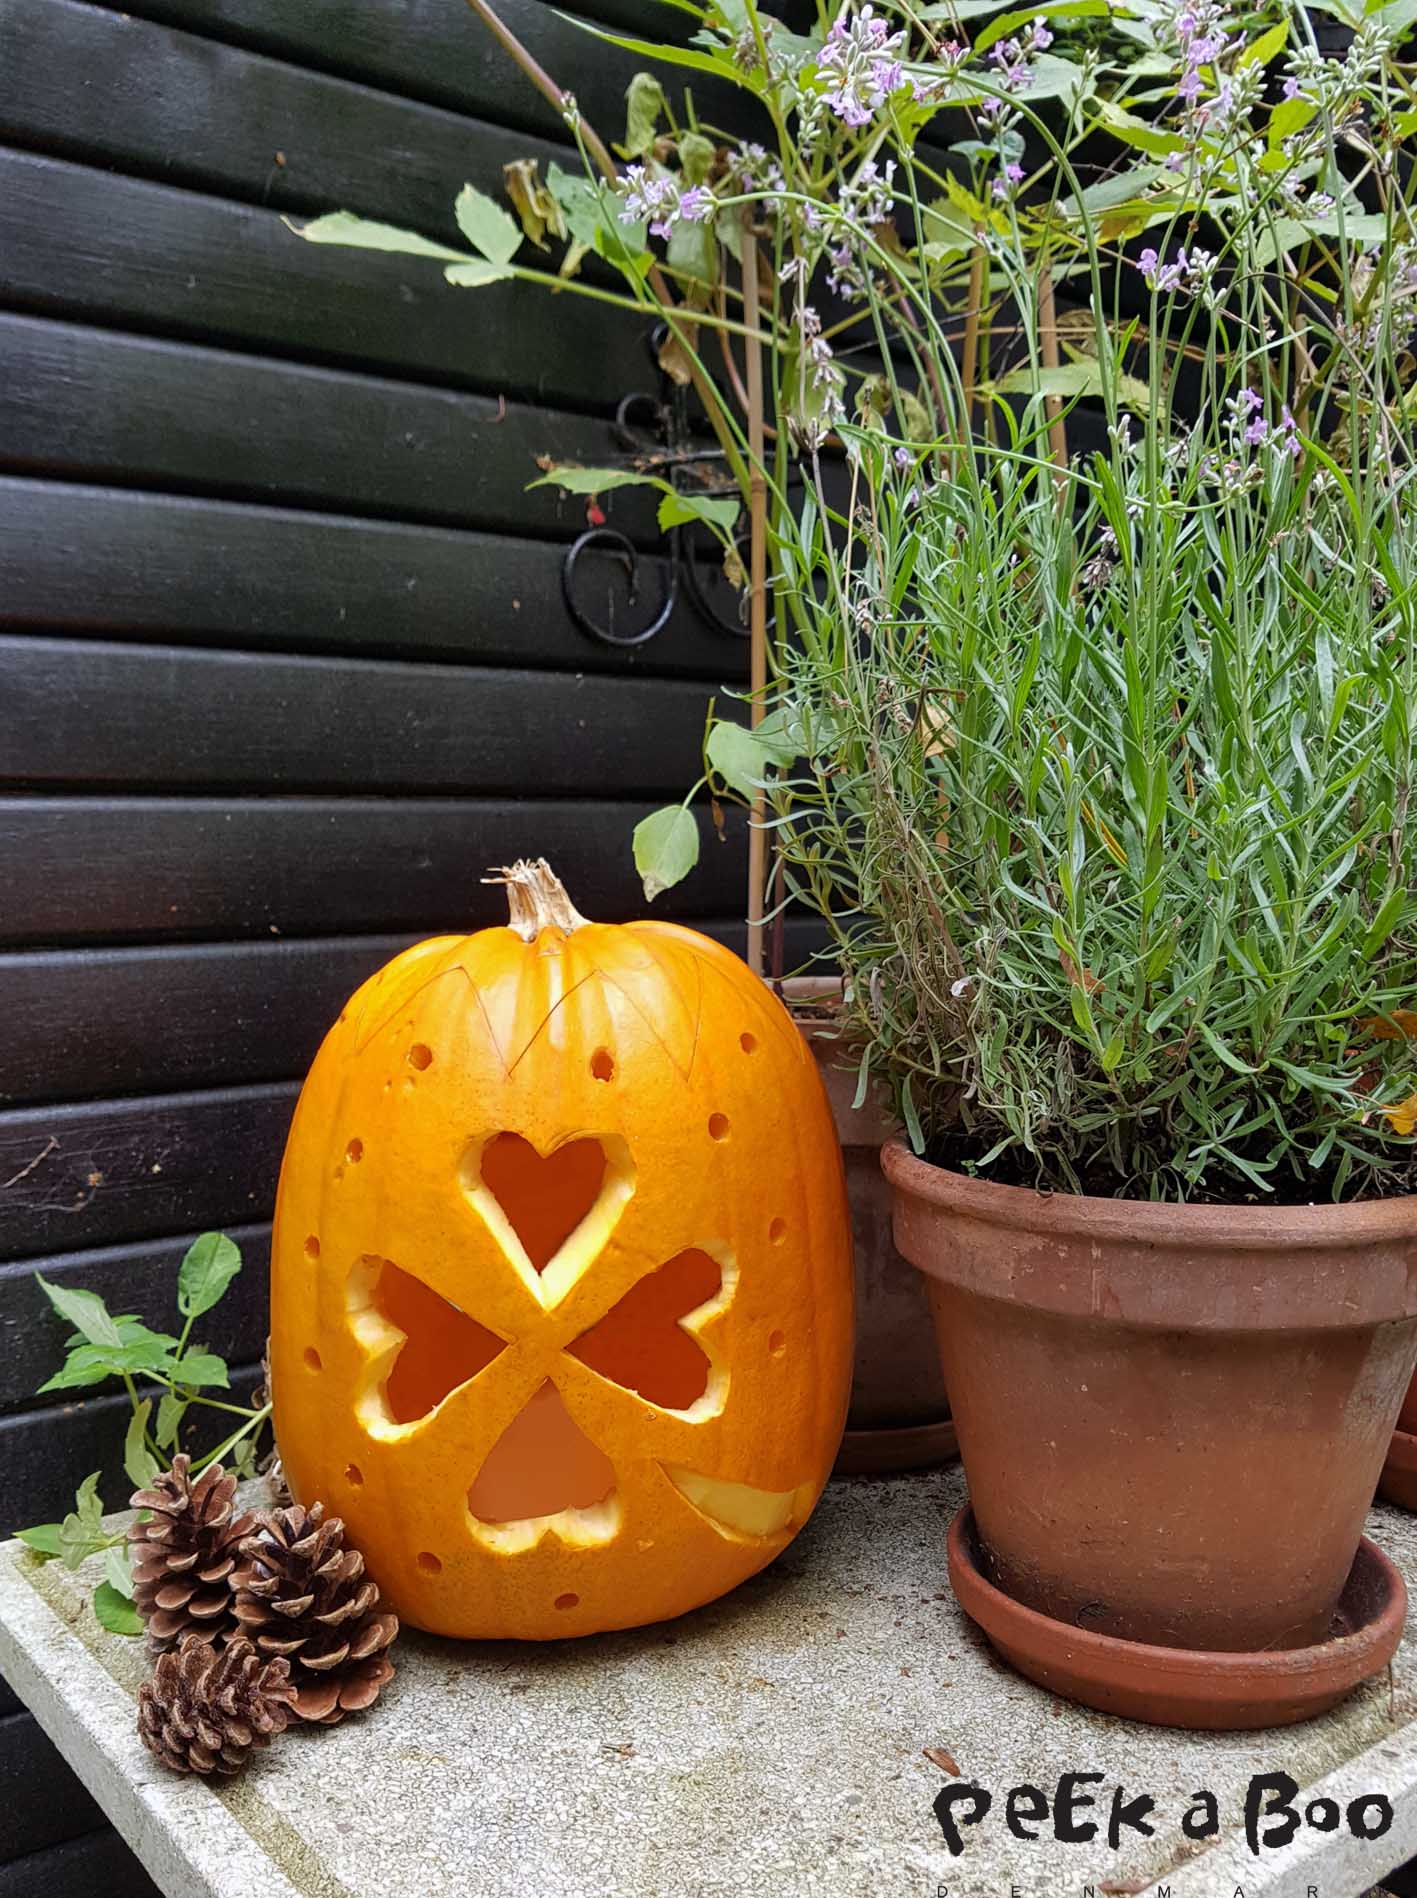 Pumpkin lantern with four-leaf clover pattern.